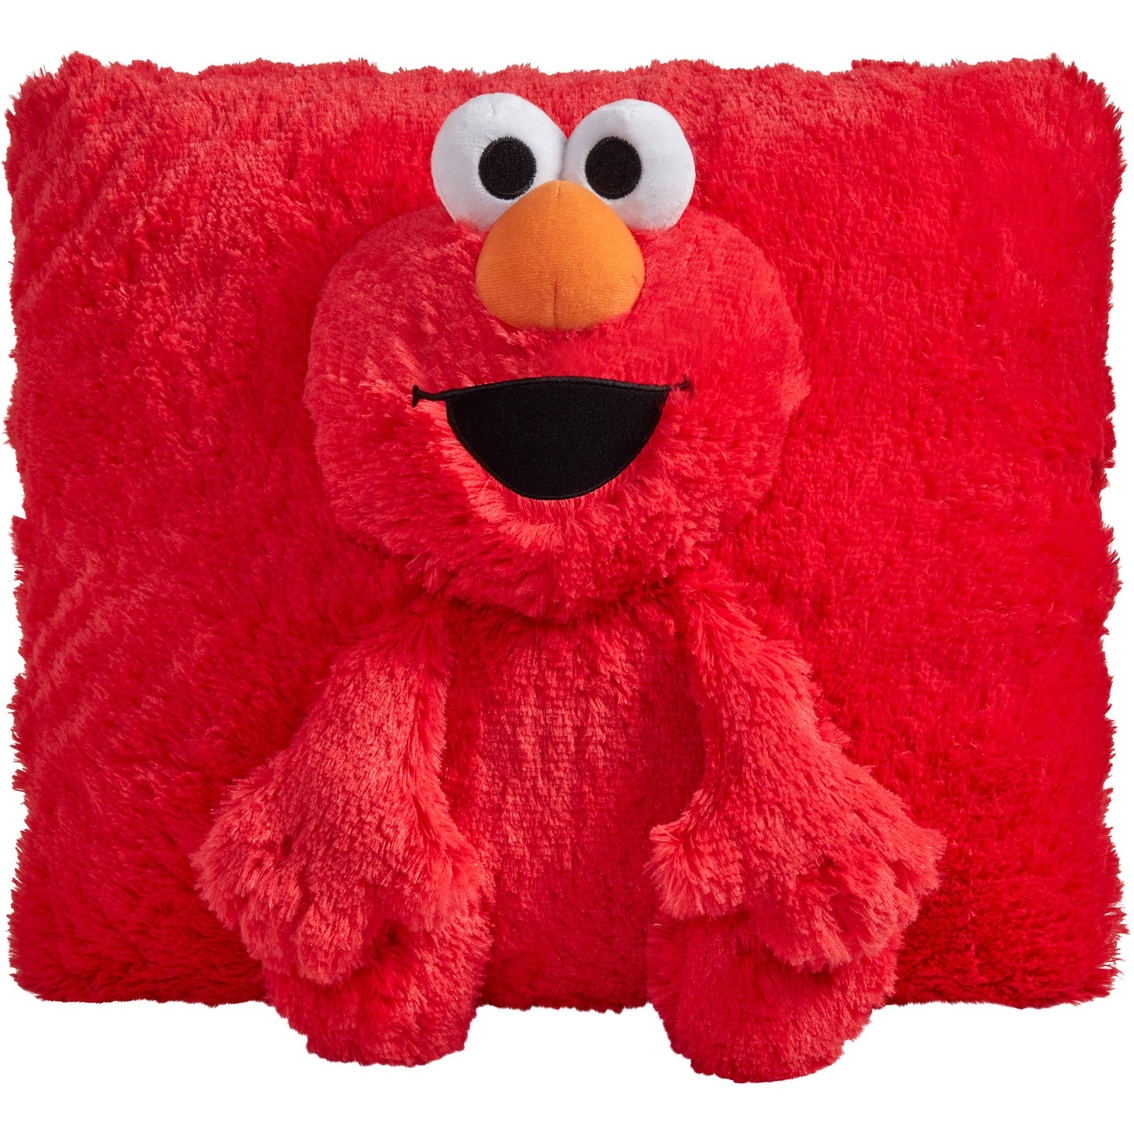 Pillow Pets Sesame Street Elmo Large Plush Toy For Kids